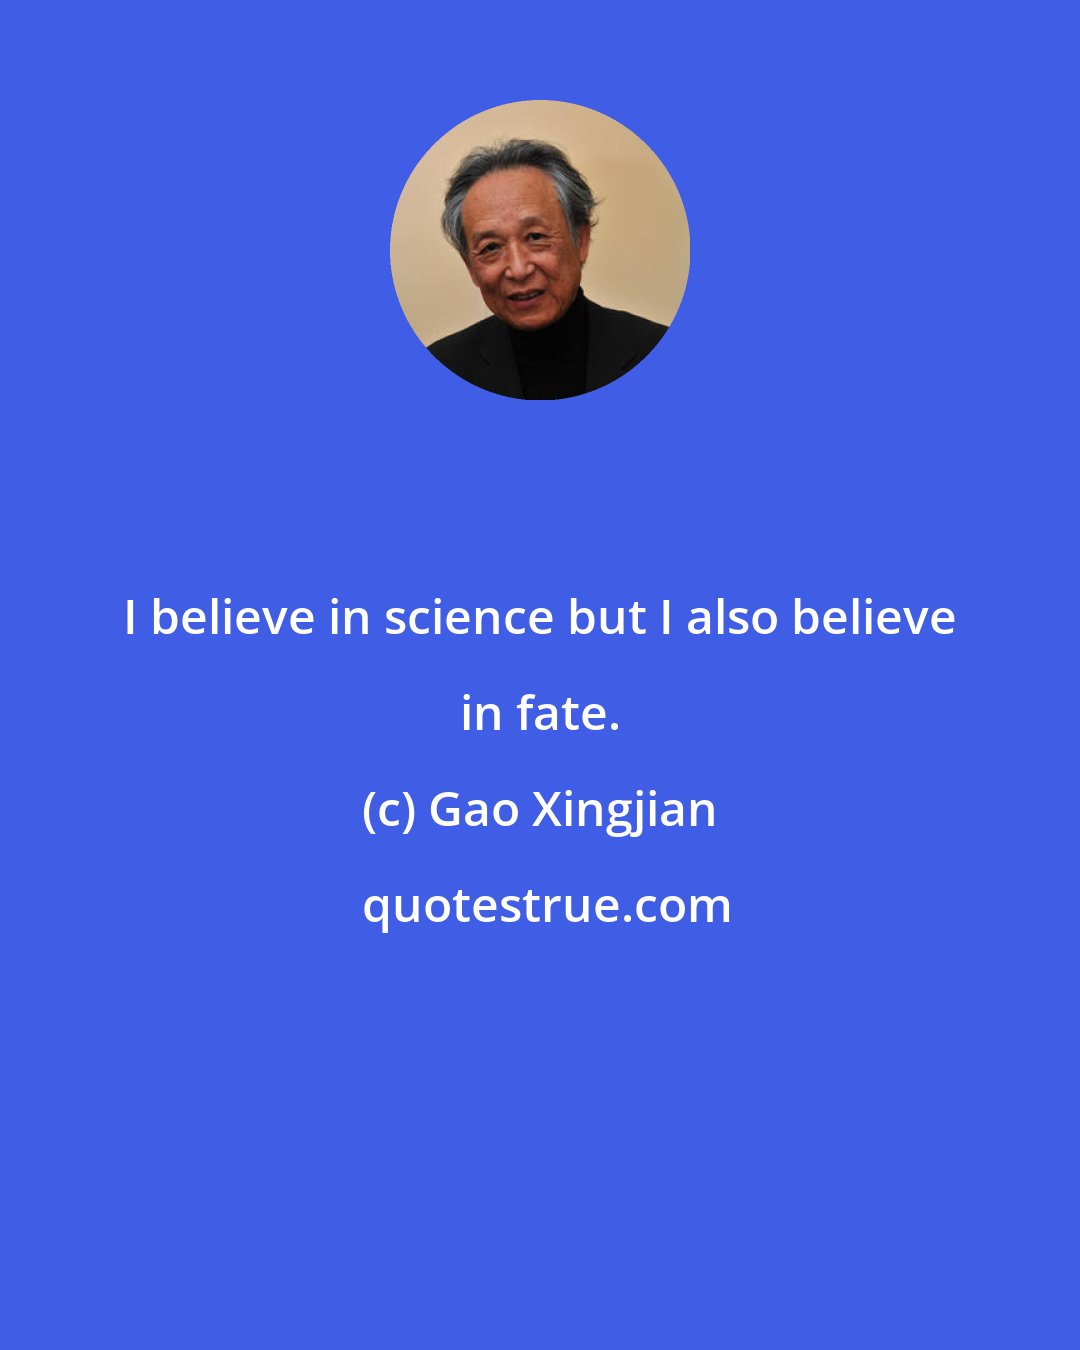 Gao Xingjian: I believe in science but I also believe in fate.